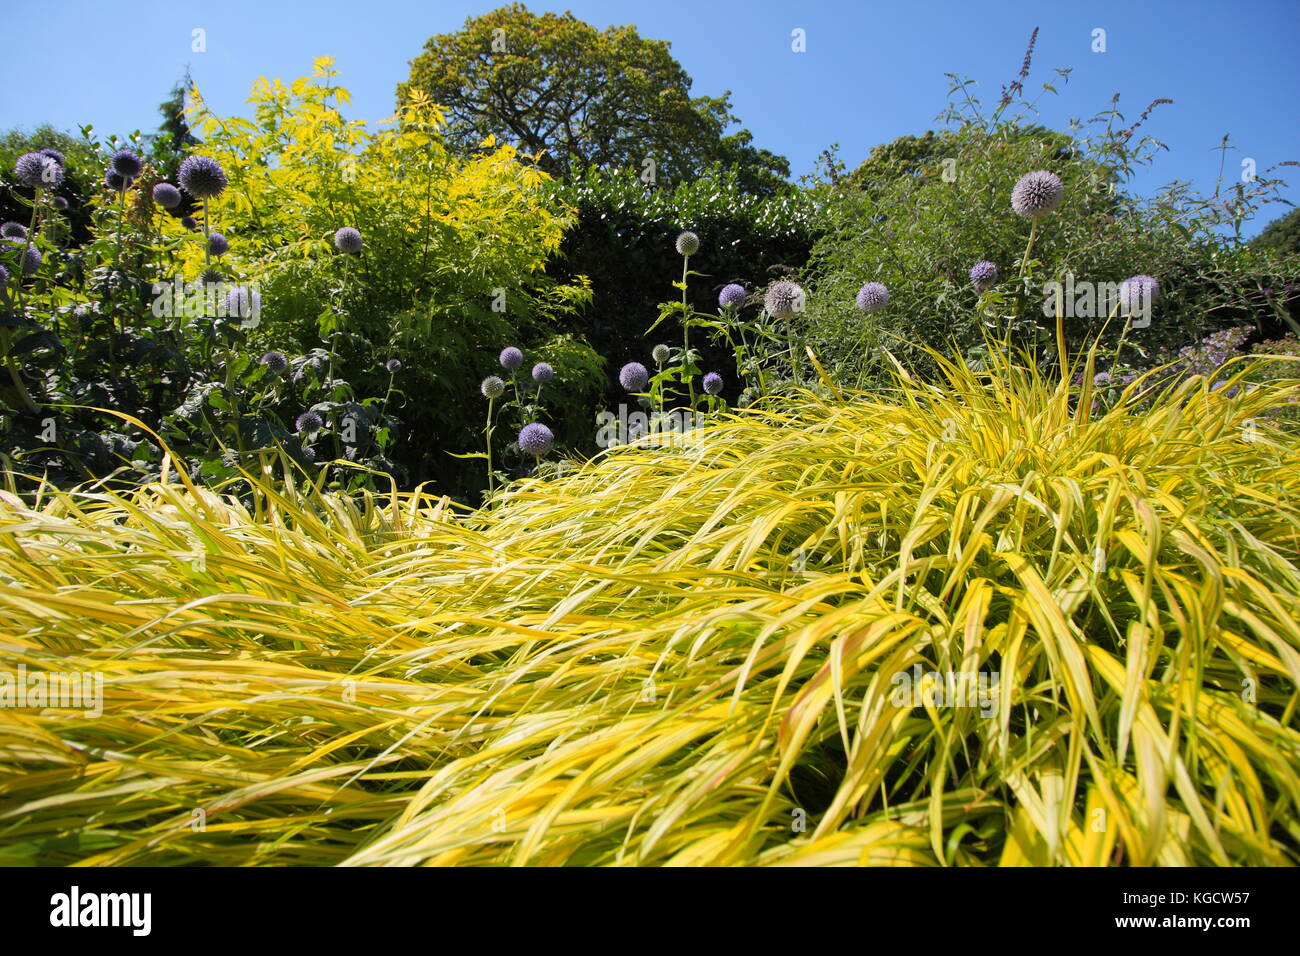 Golden hakonechloa grass (Hakonechloa macra 'Aureola'), and Echinops bannaticus 'Taplow Blue' globe thistle in a summer  garden border , Yorkshire, UK Stock Photo